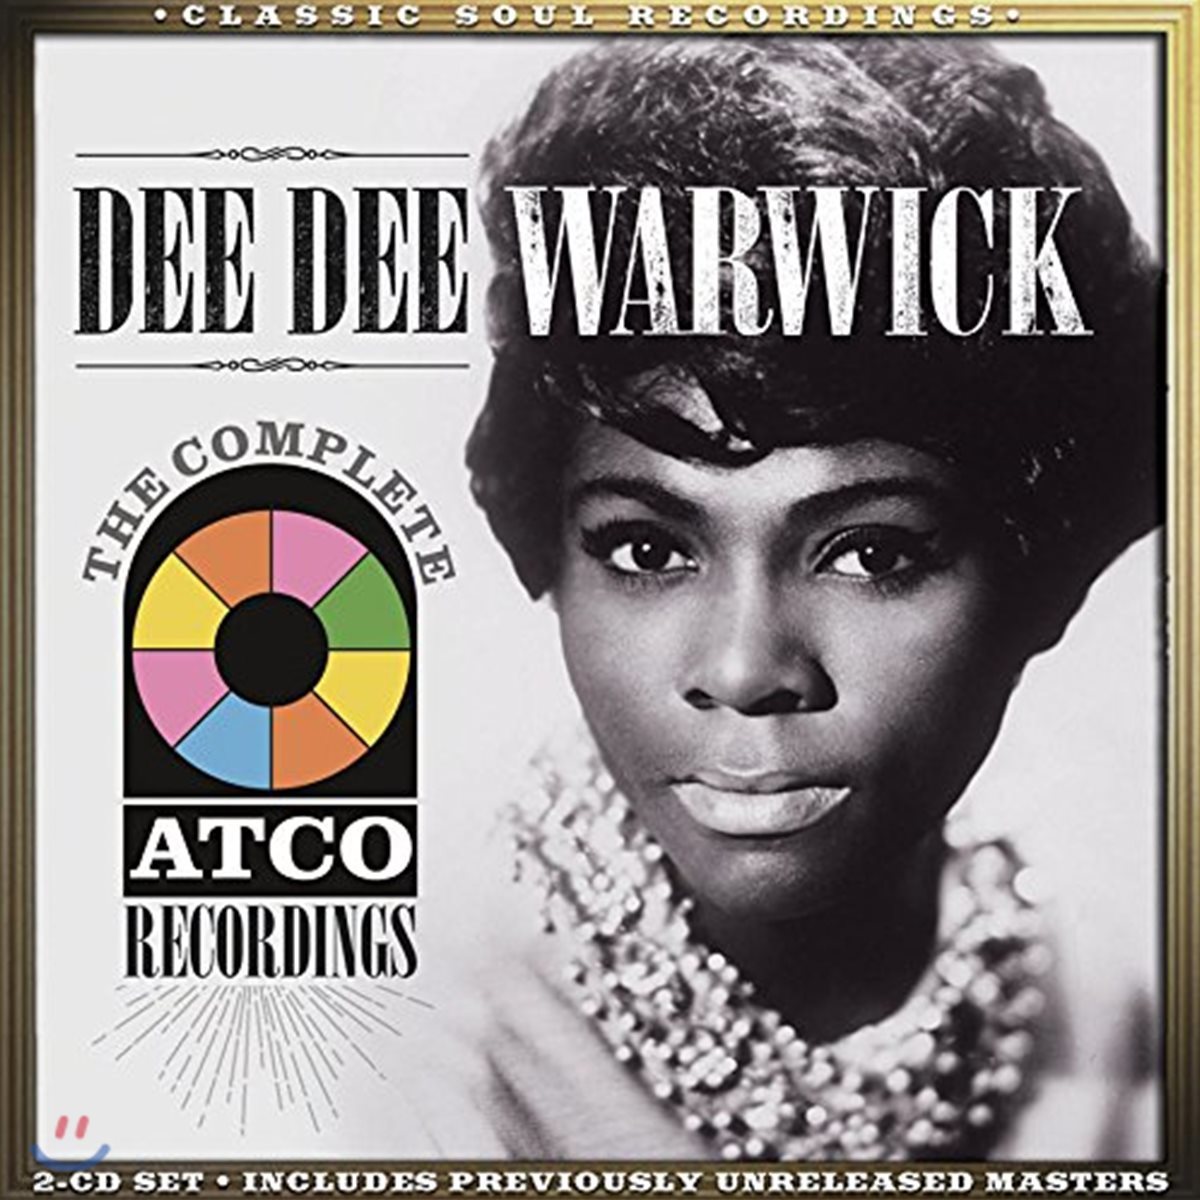 Dee Dee Warwick (디 디 워윅) - The Complete ATCO Recordings